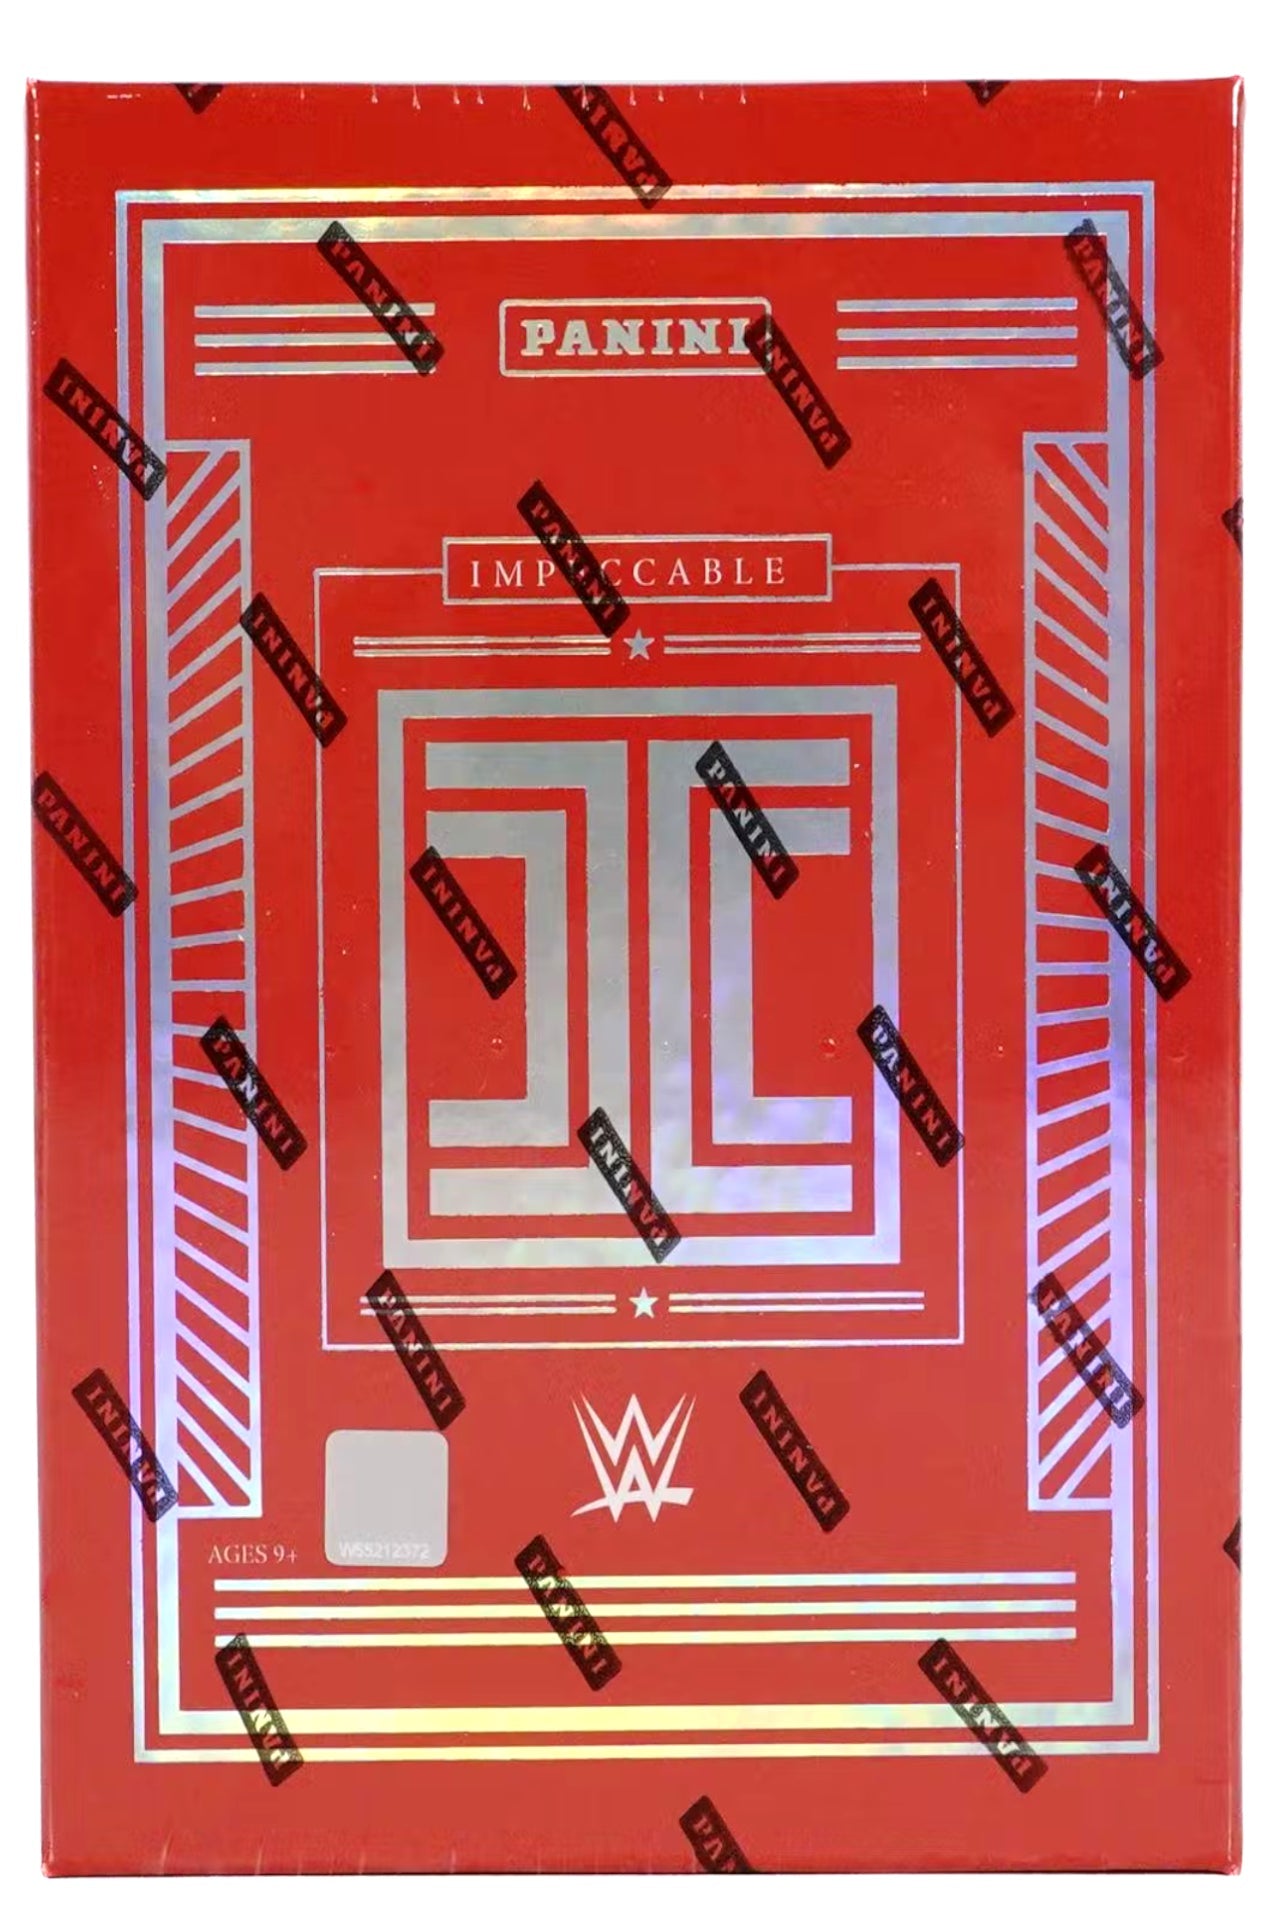 2022 Panini WWE Impeccable Hobby Box